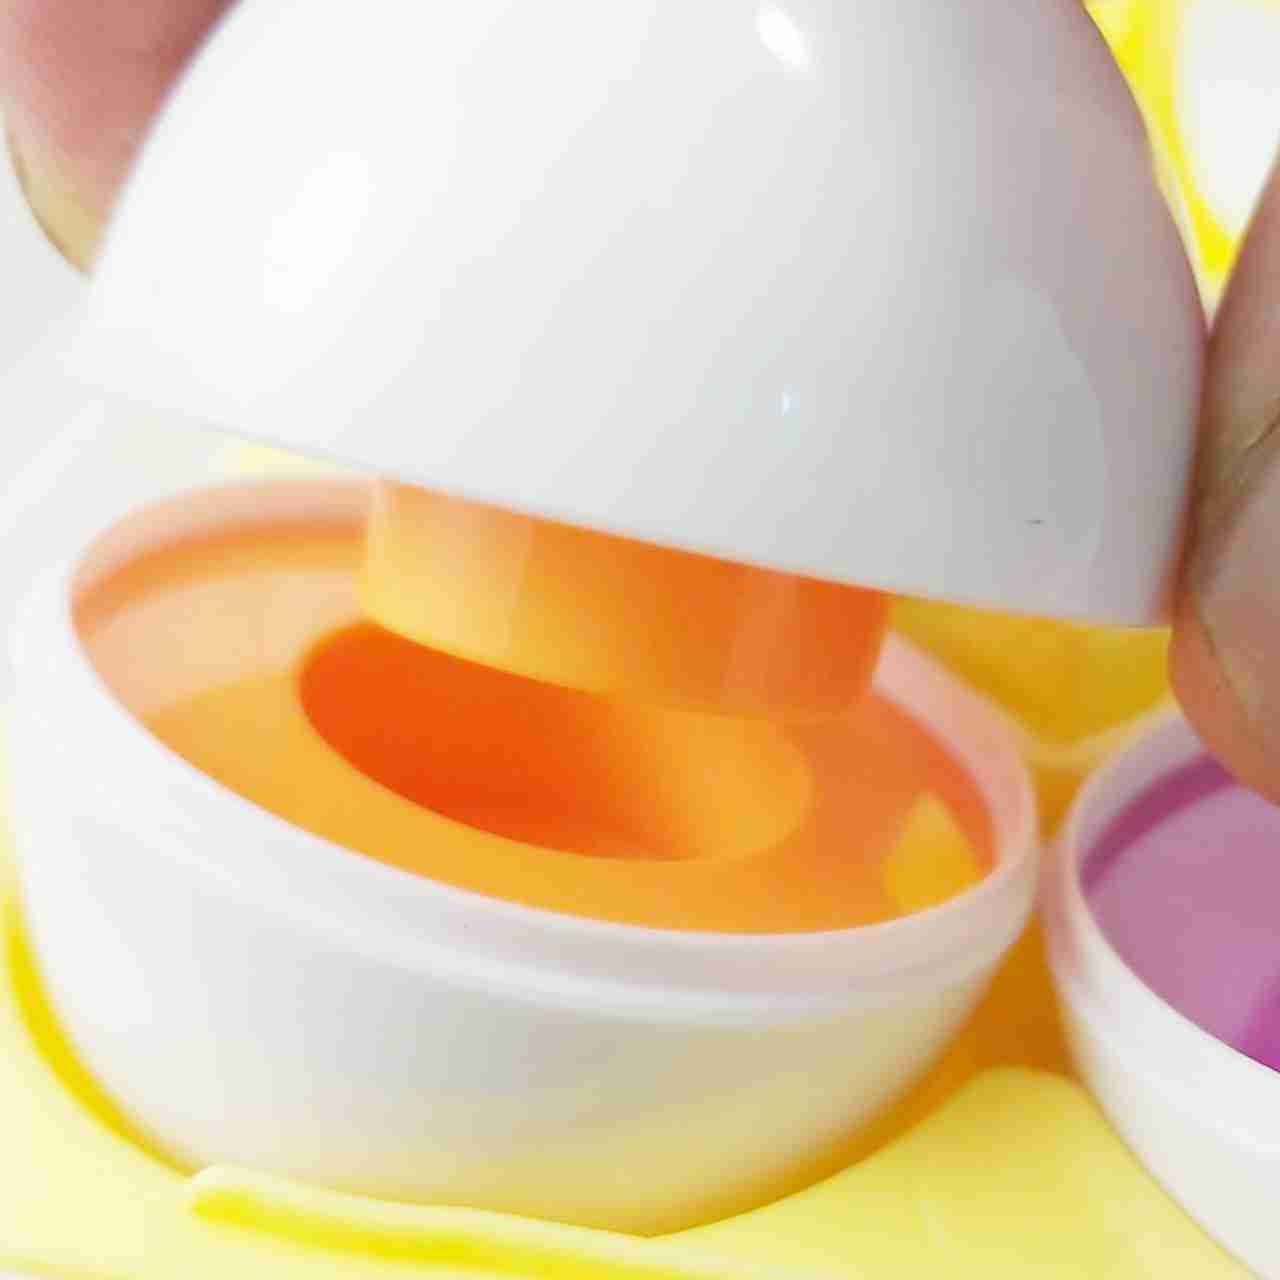 【GCT玩具嚴選】12PCS形狀顏色配對蛋